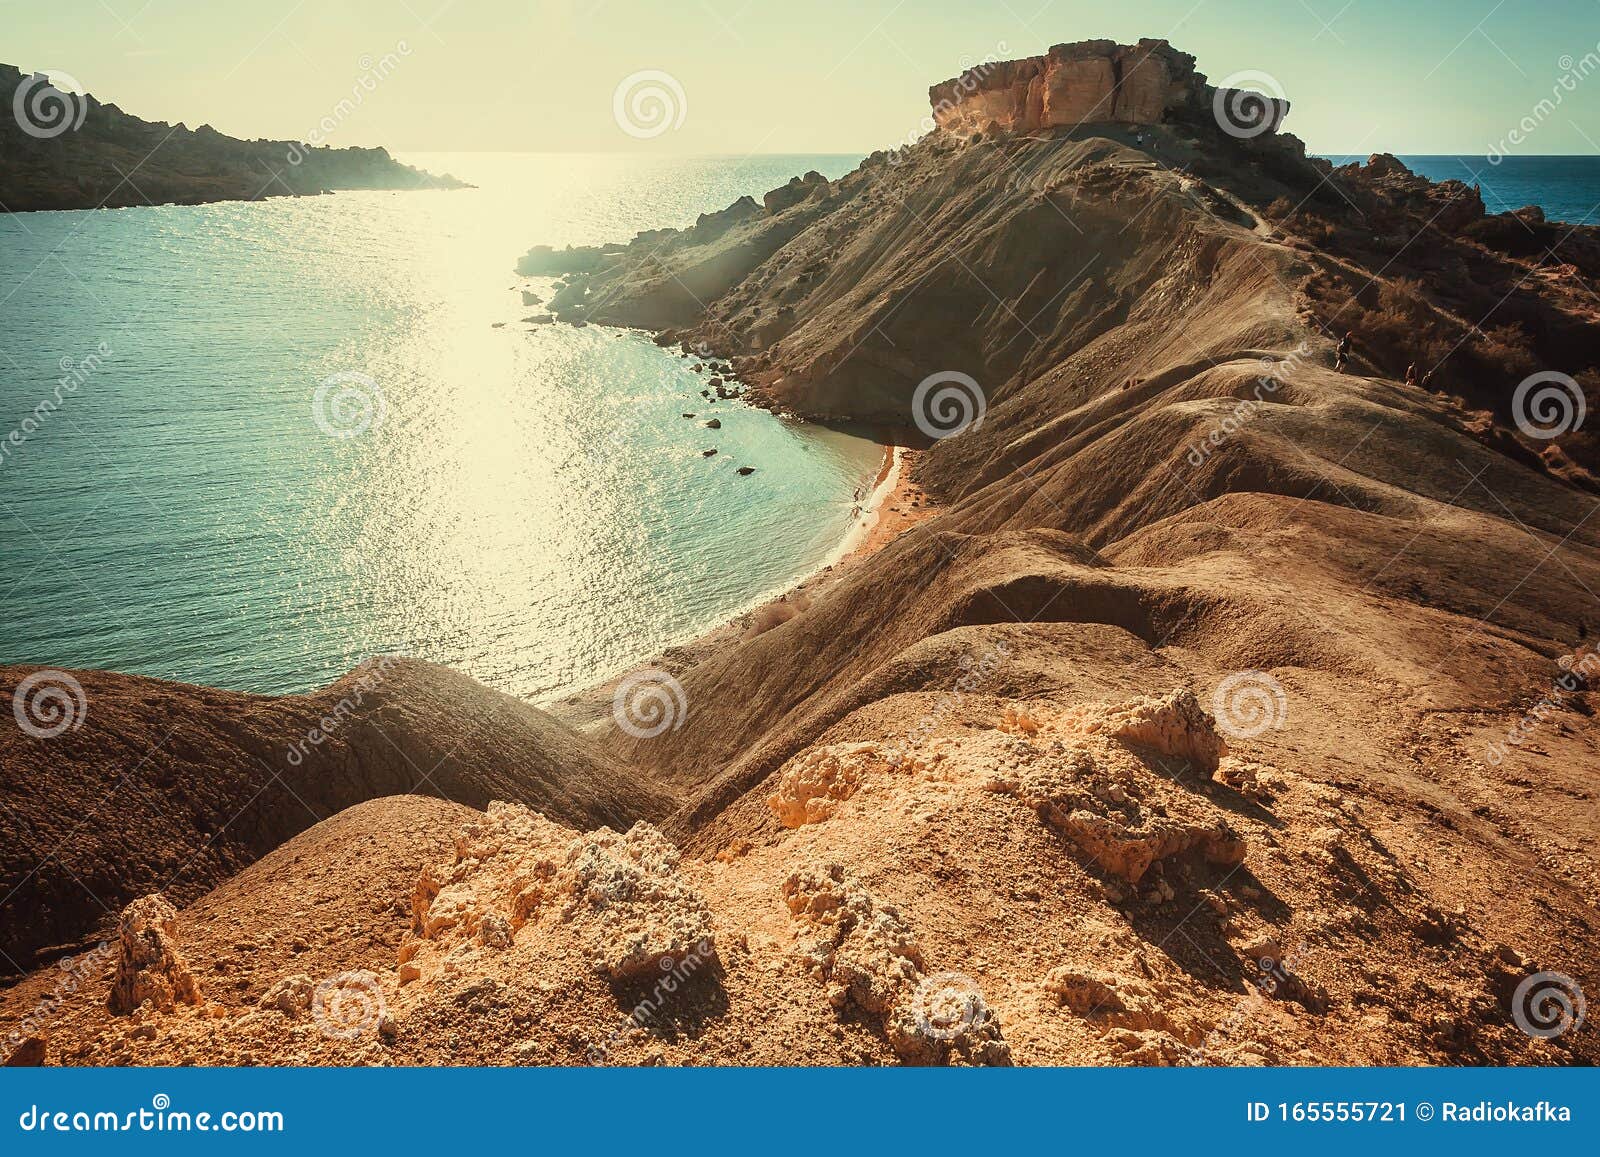 mediterranian sea scene, rocky cliff over sunny coastline